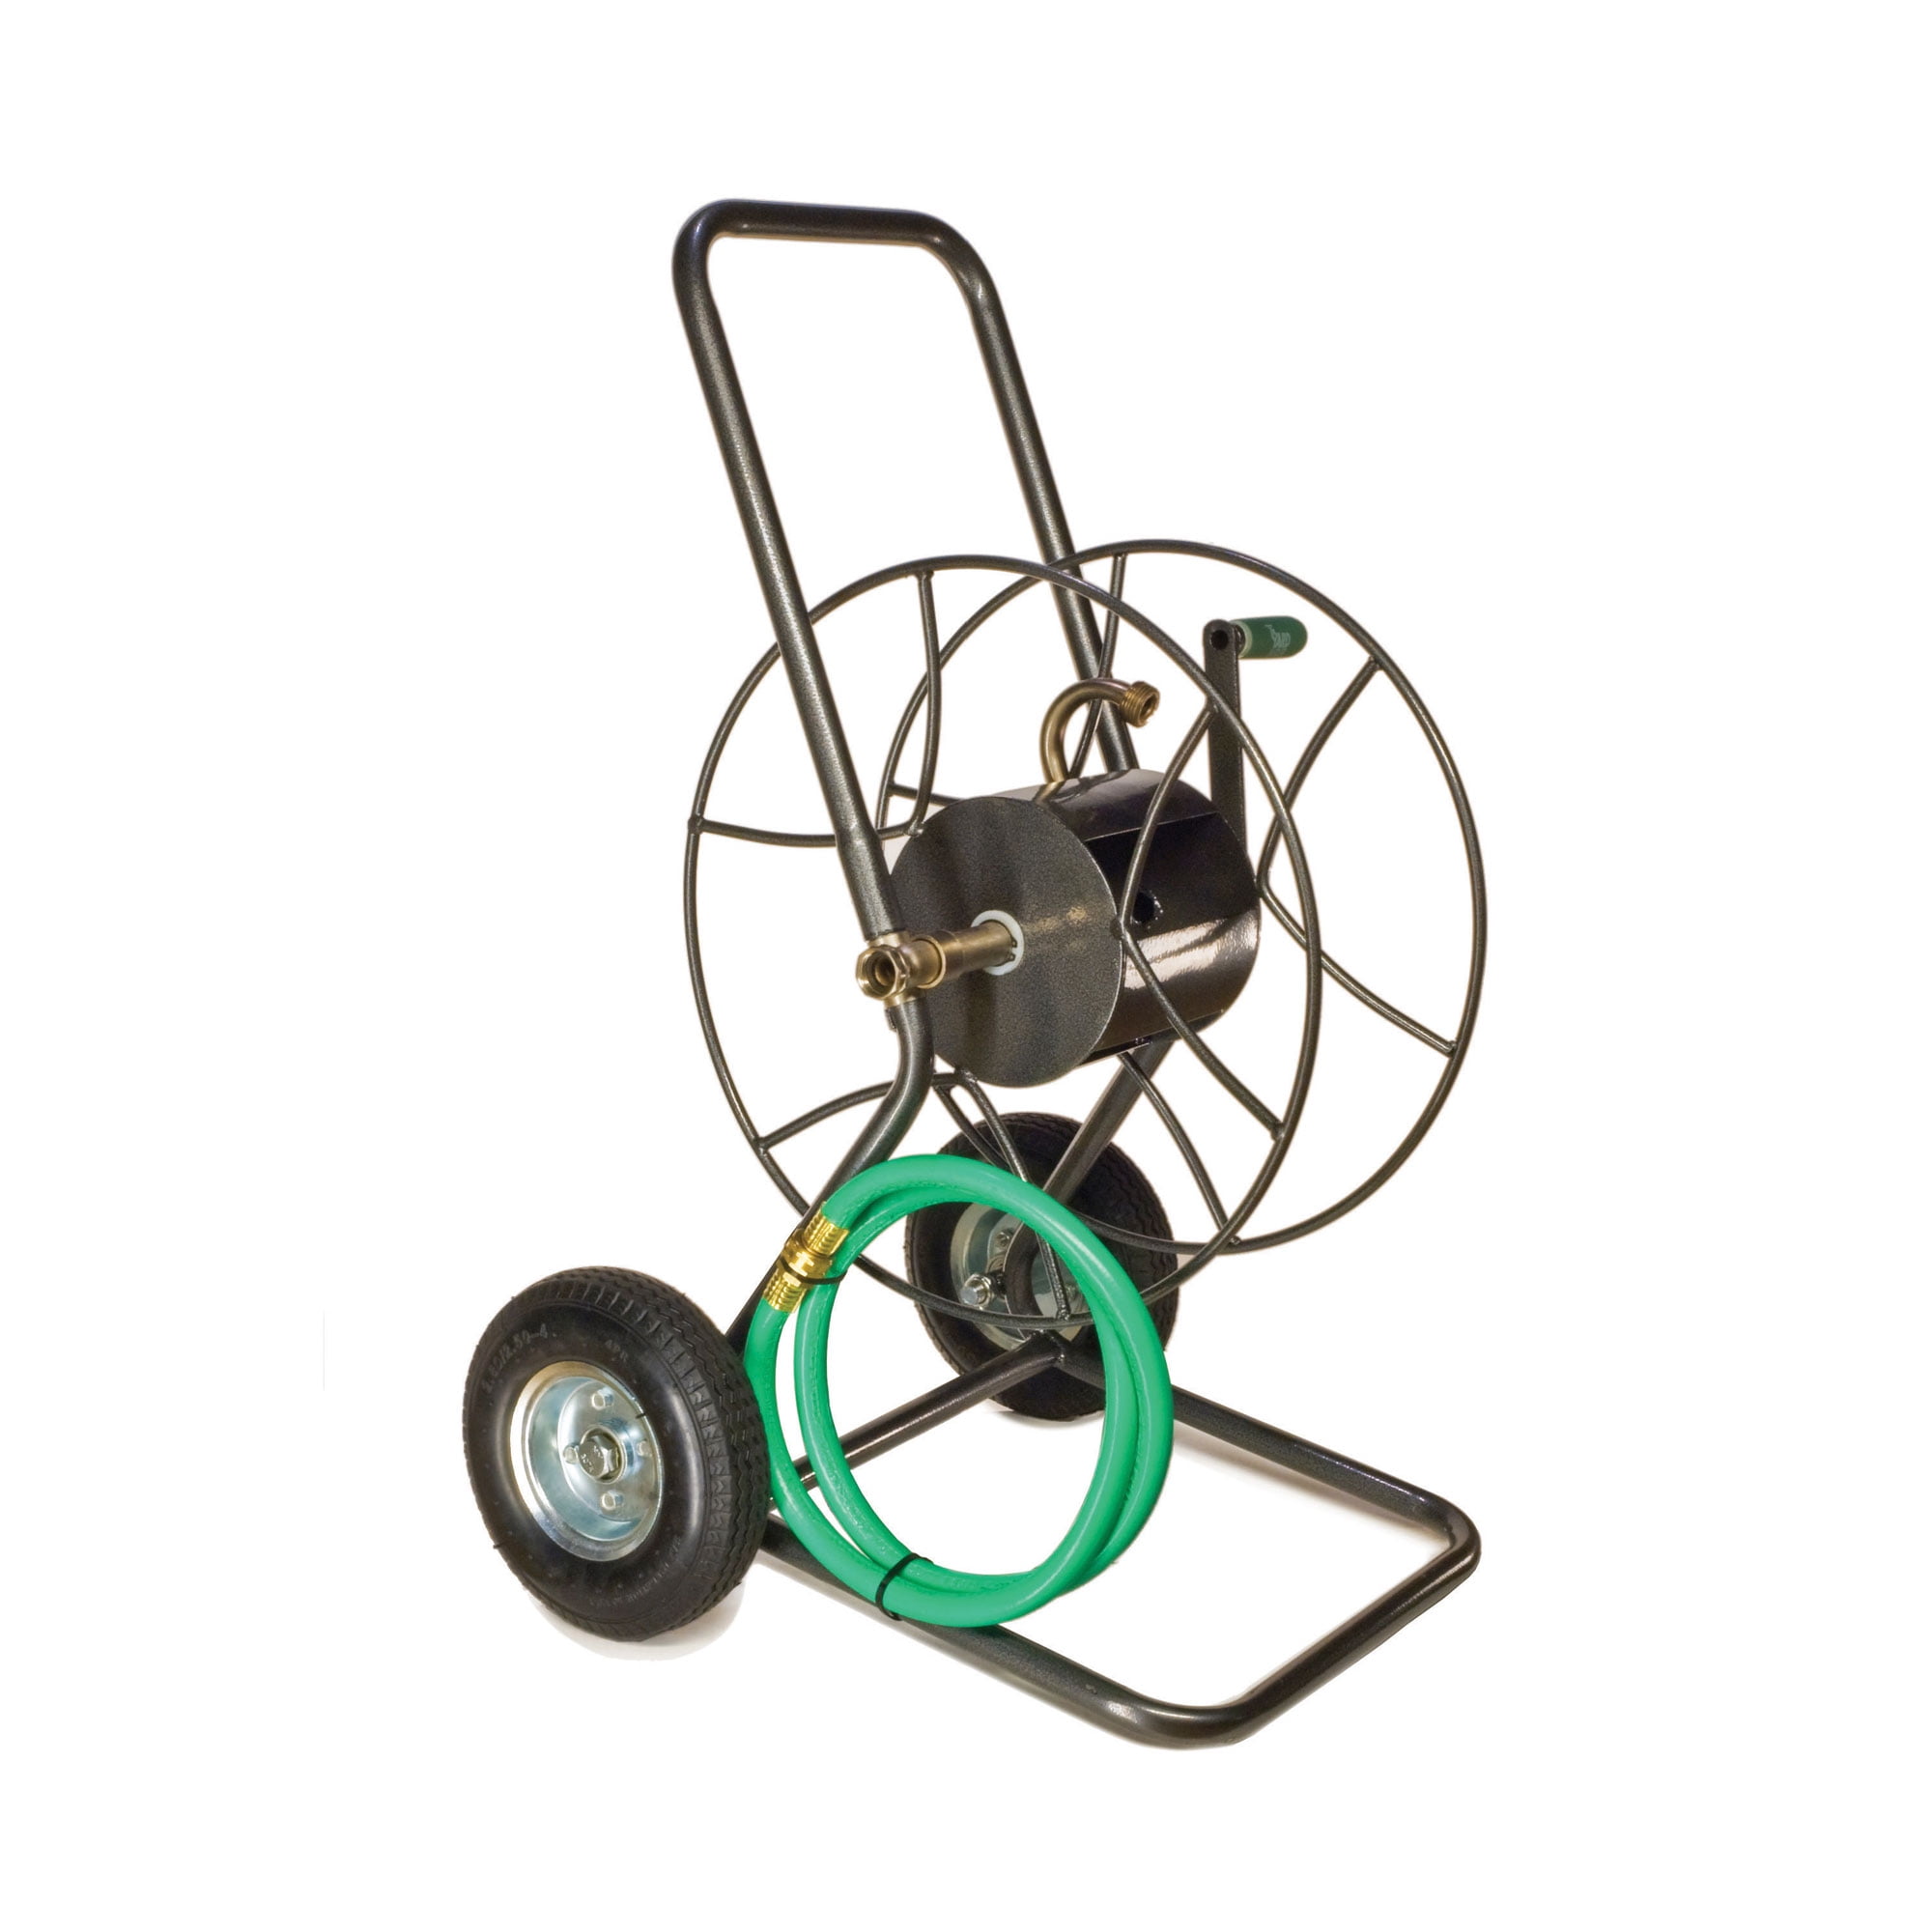 Two-Wheeled Garden Hose Reel Cart